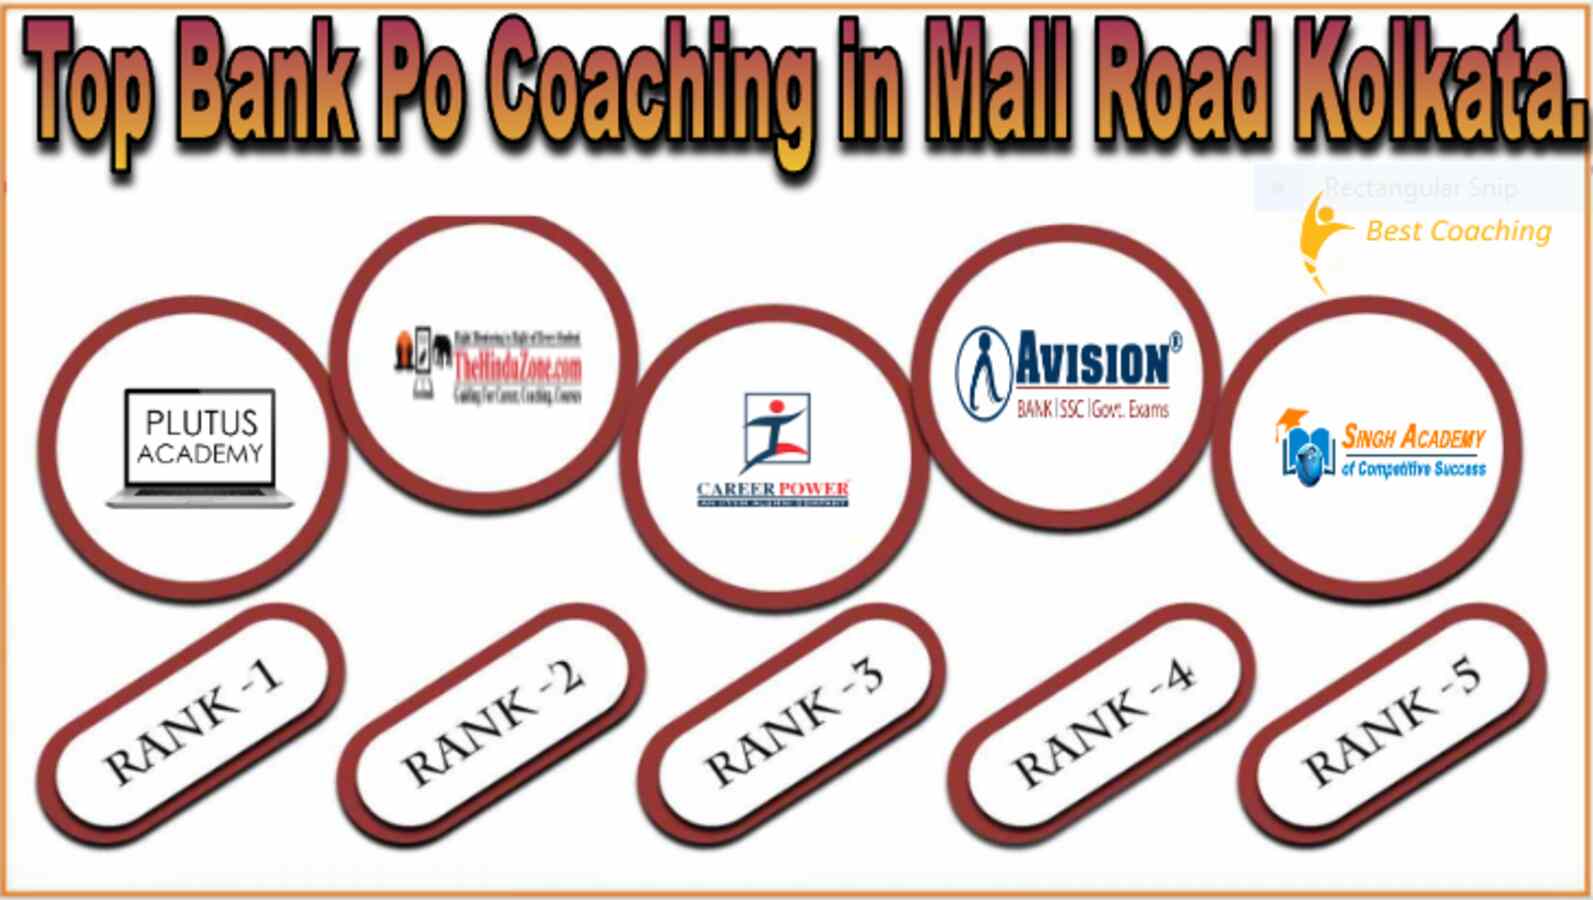 Top Bank Po Coaching in Mall Road Kolkata